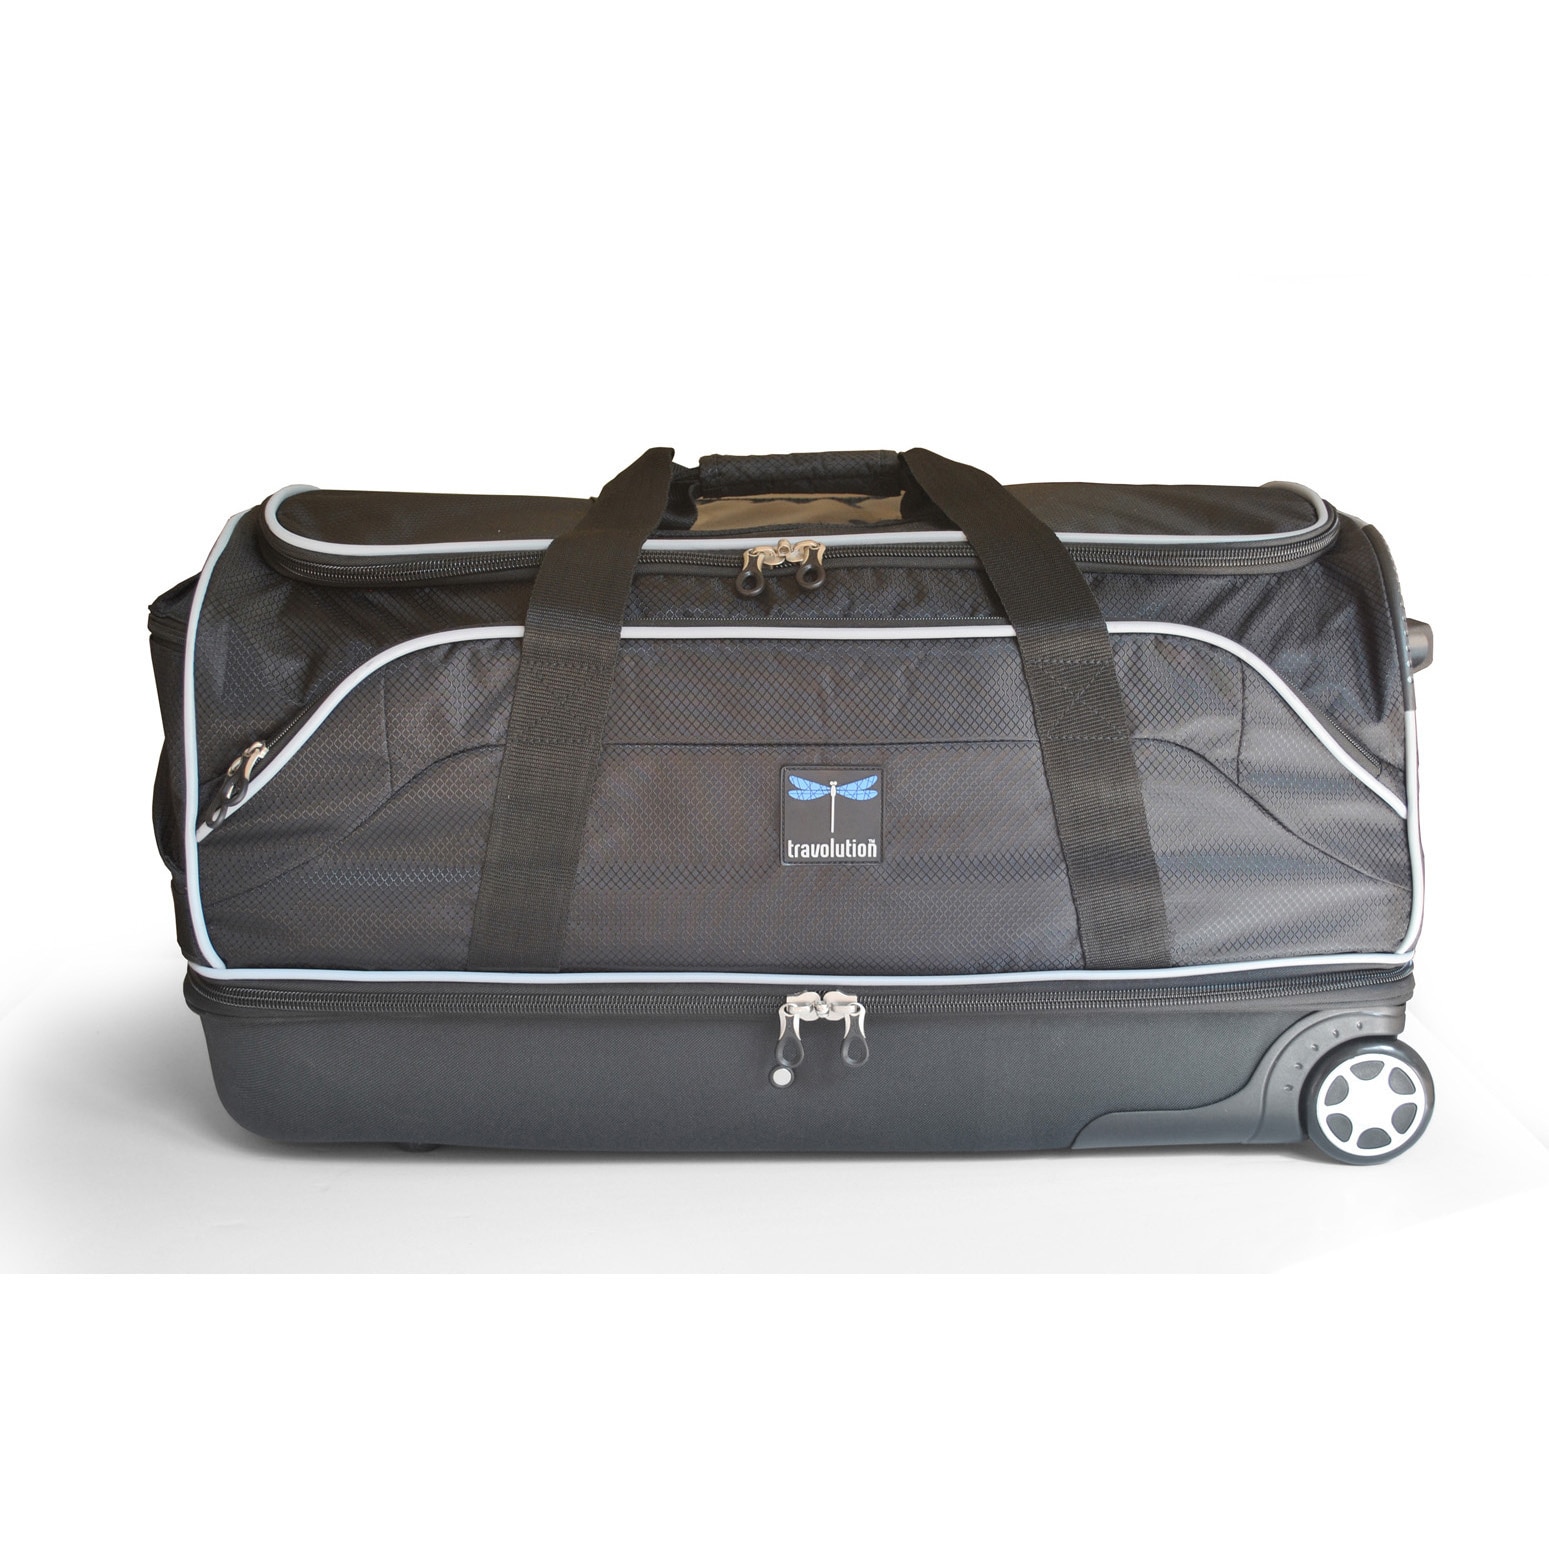 28-inch Wheeled Drop Bottom Duffel Bag with Garment Rack Travel Trip | eBay